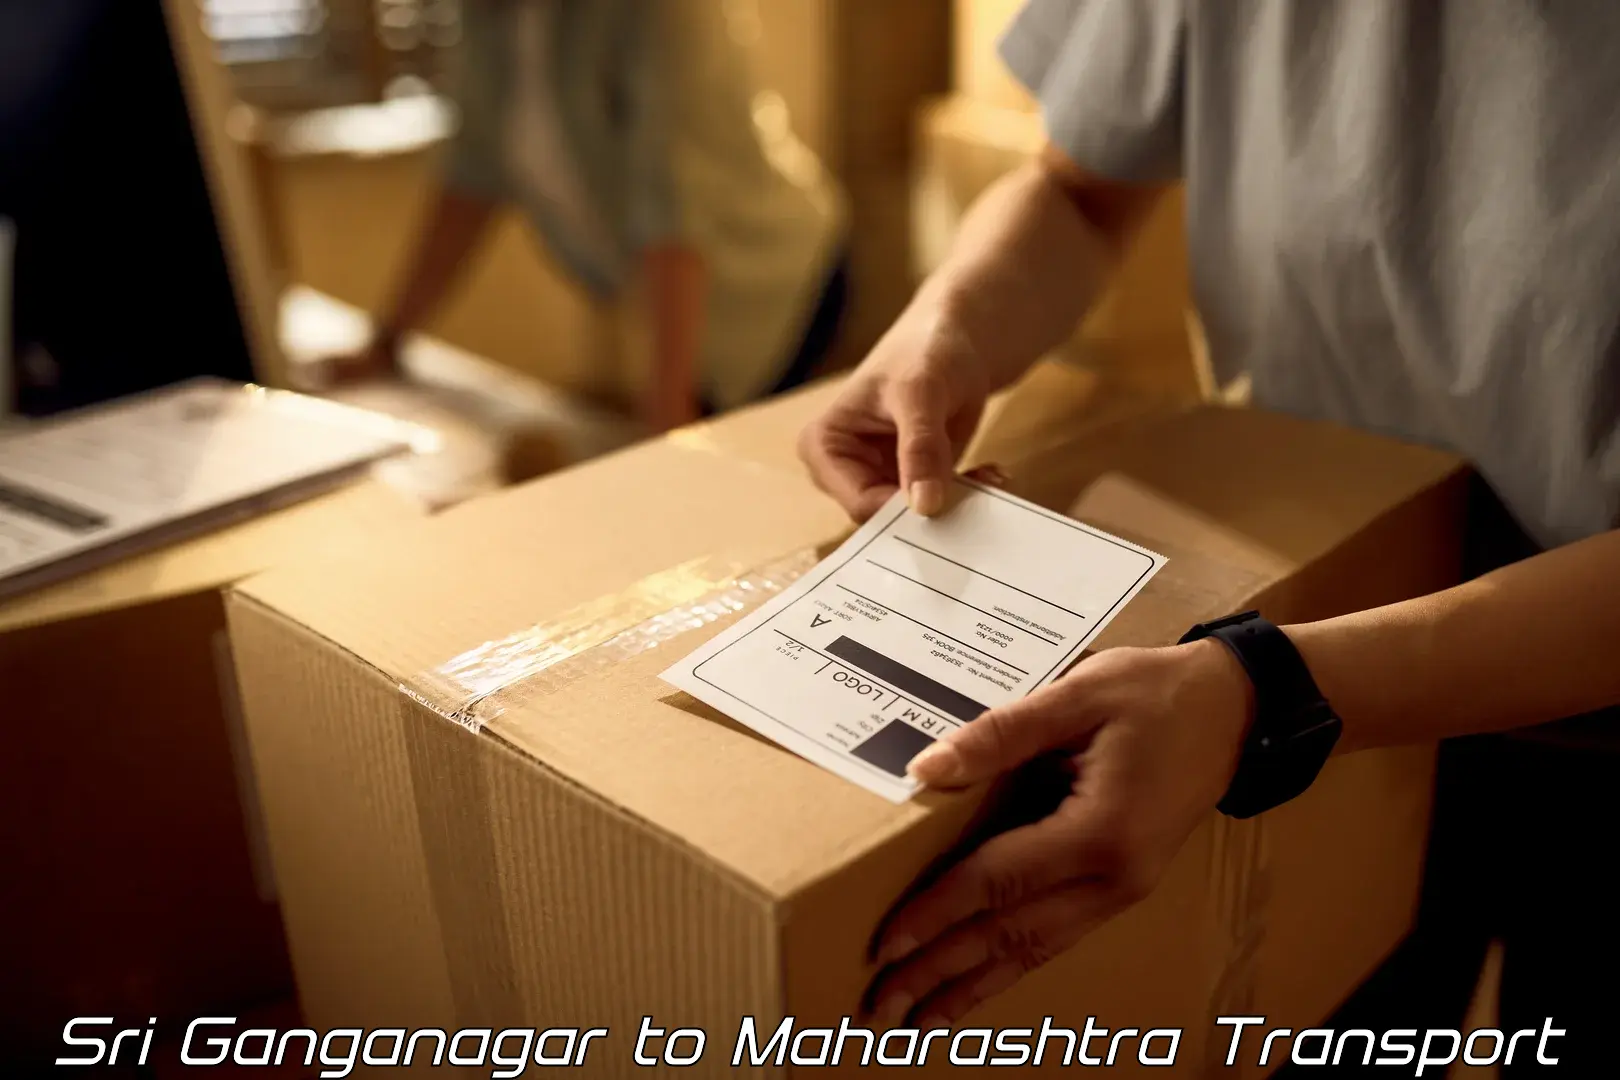 Shipping partner Sri Ganganagar to Sawantwadi